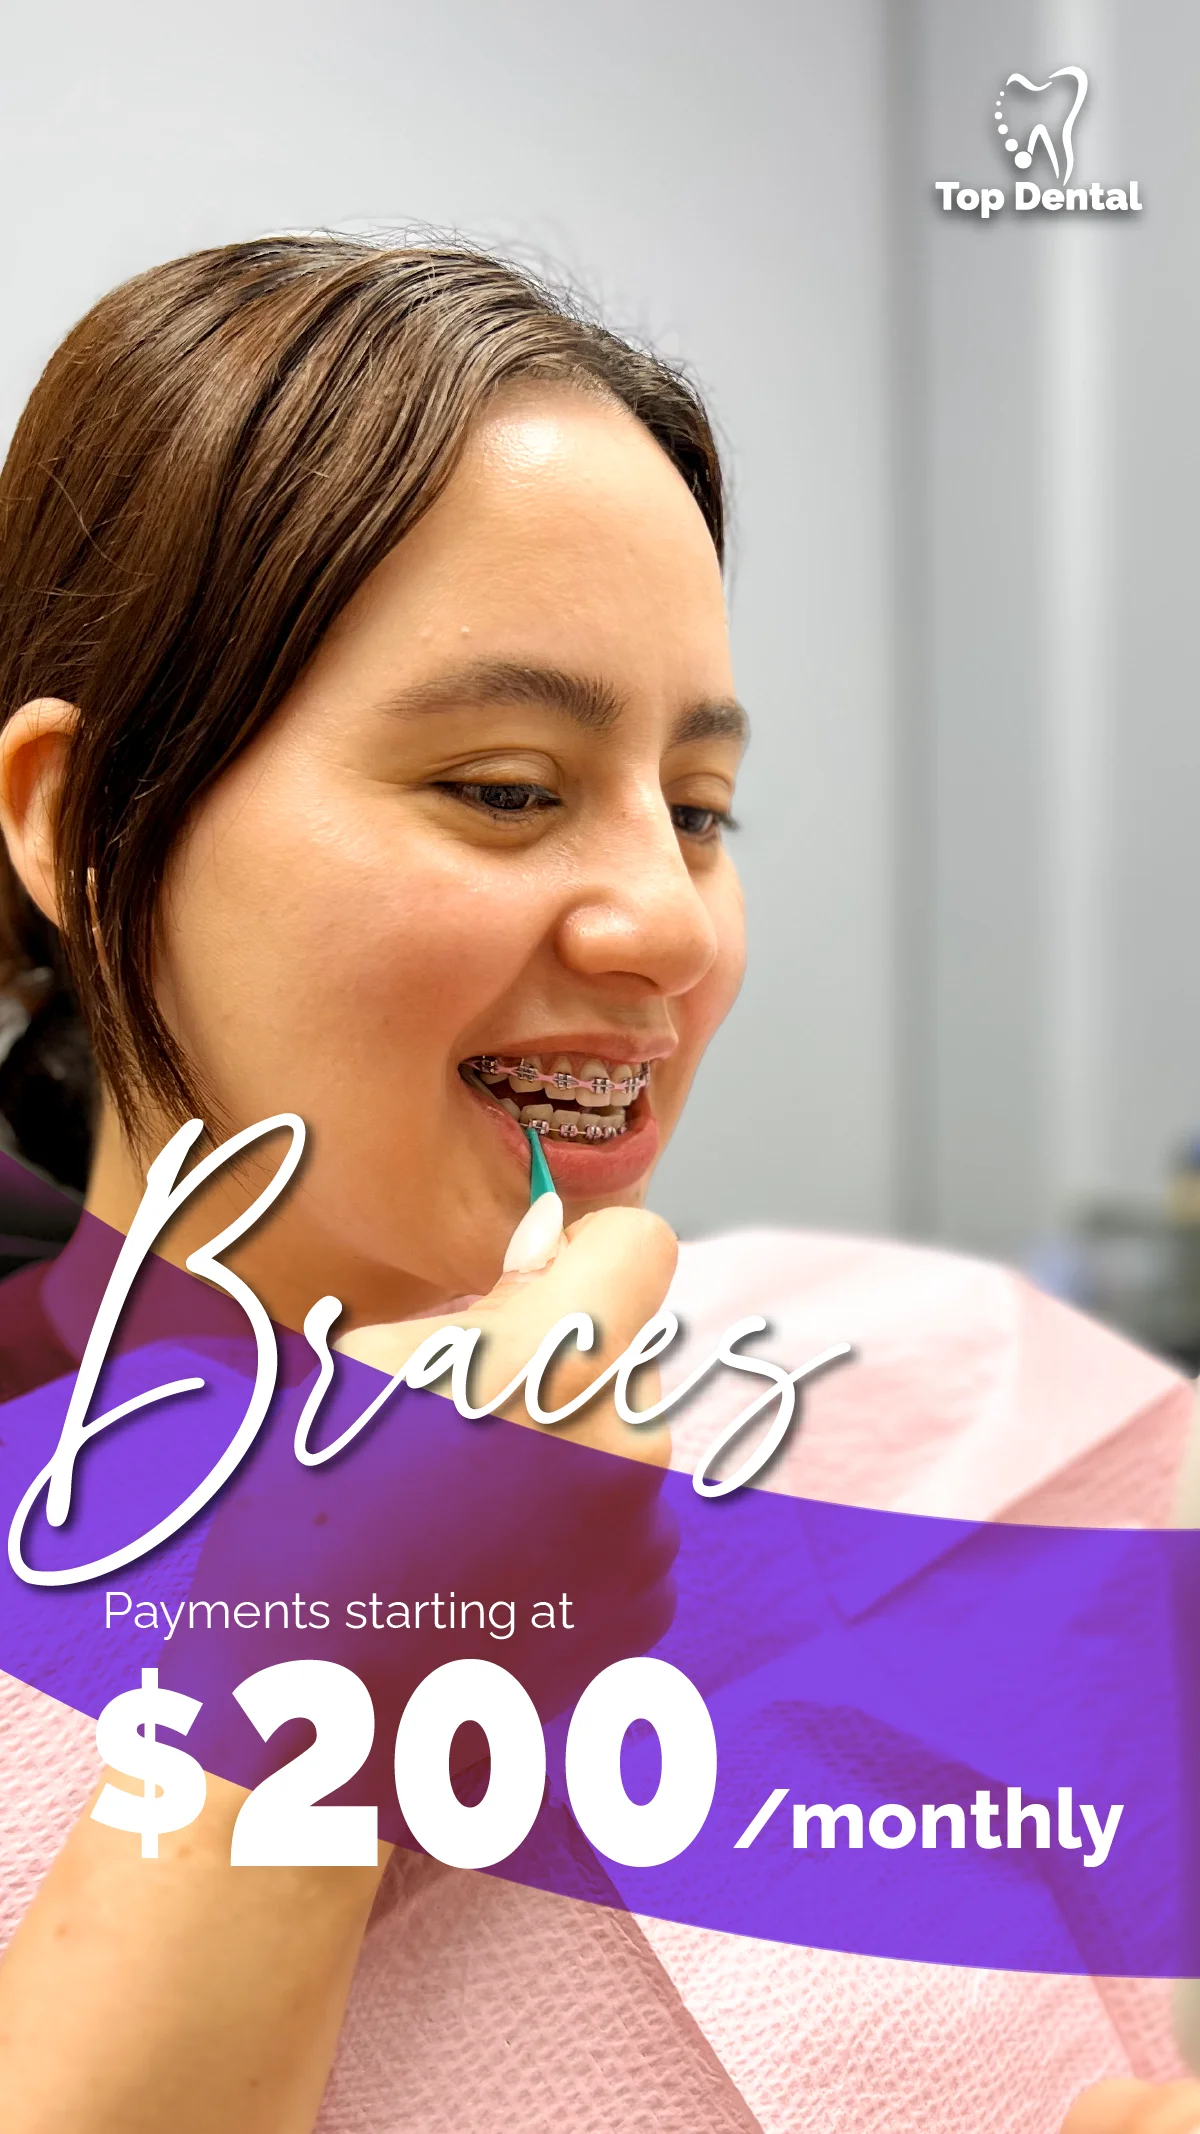 Braces Treatment - Top Dental